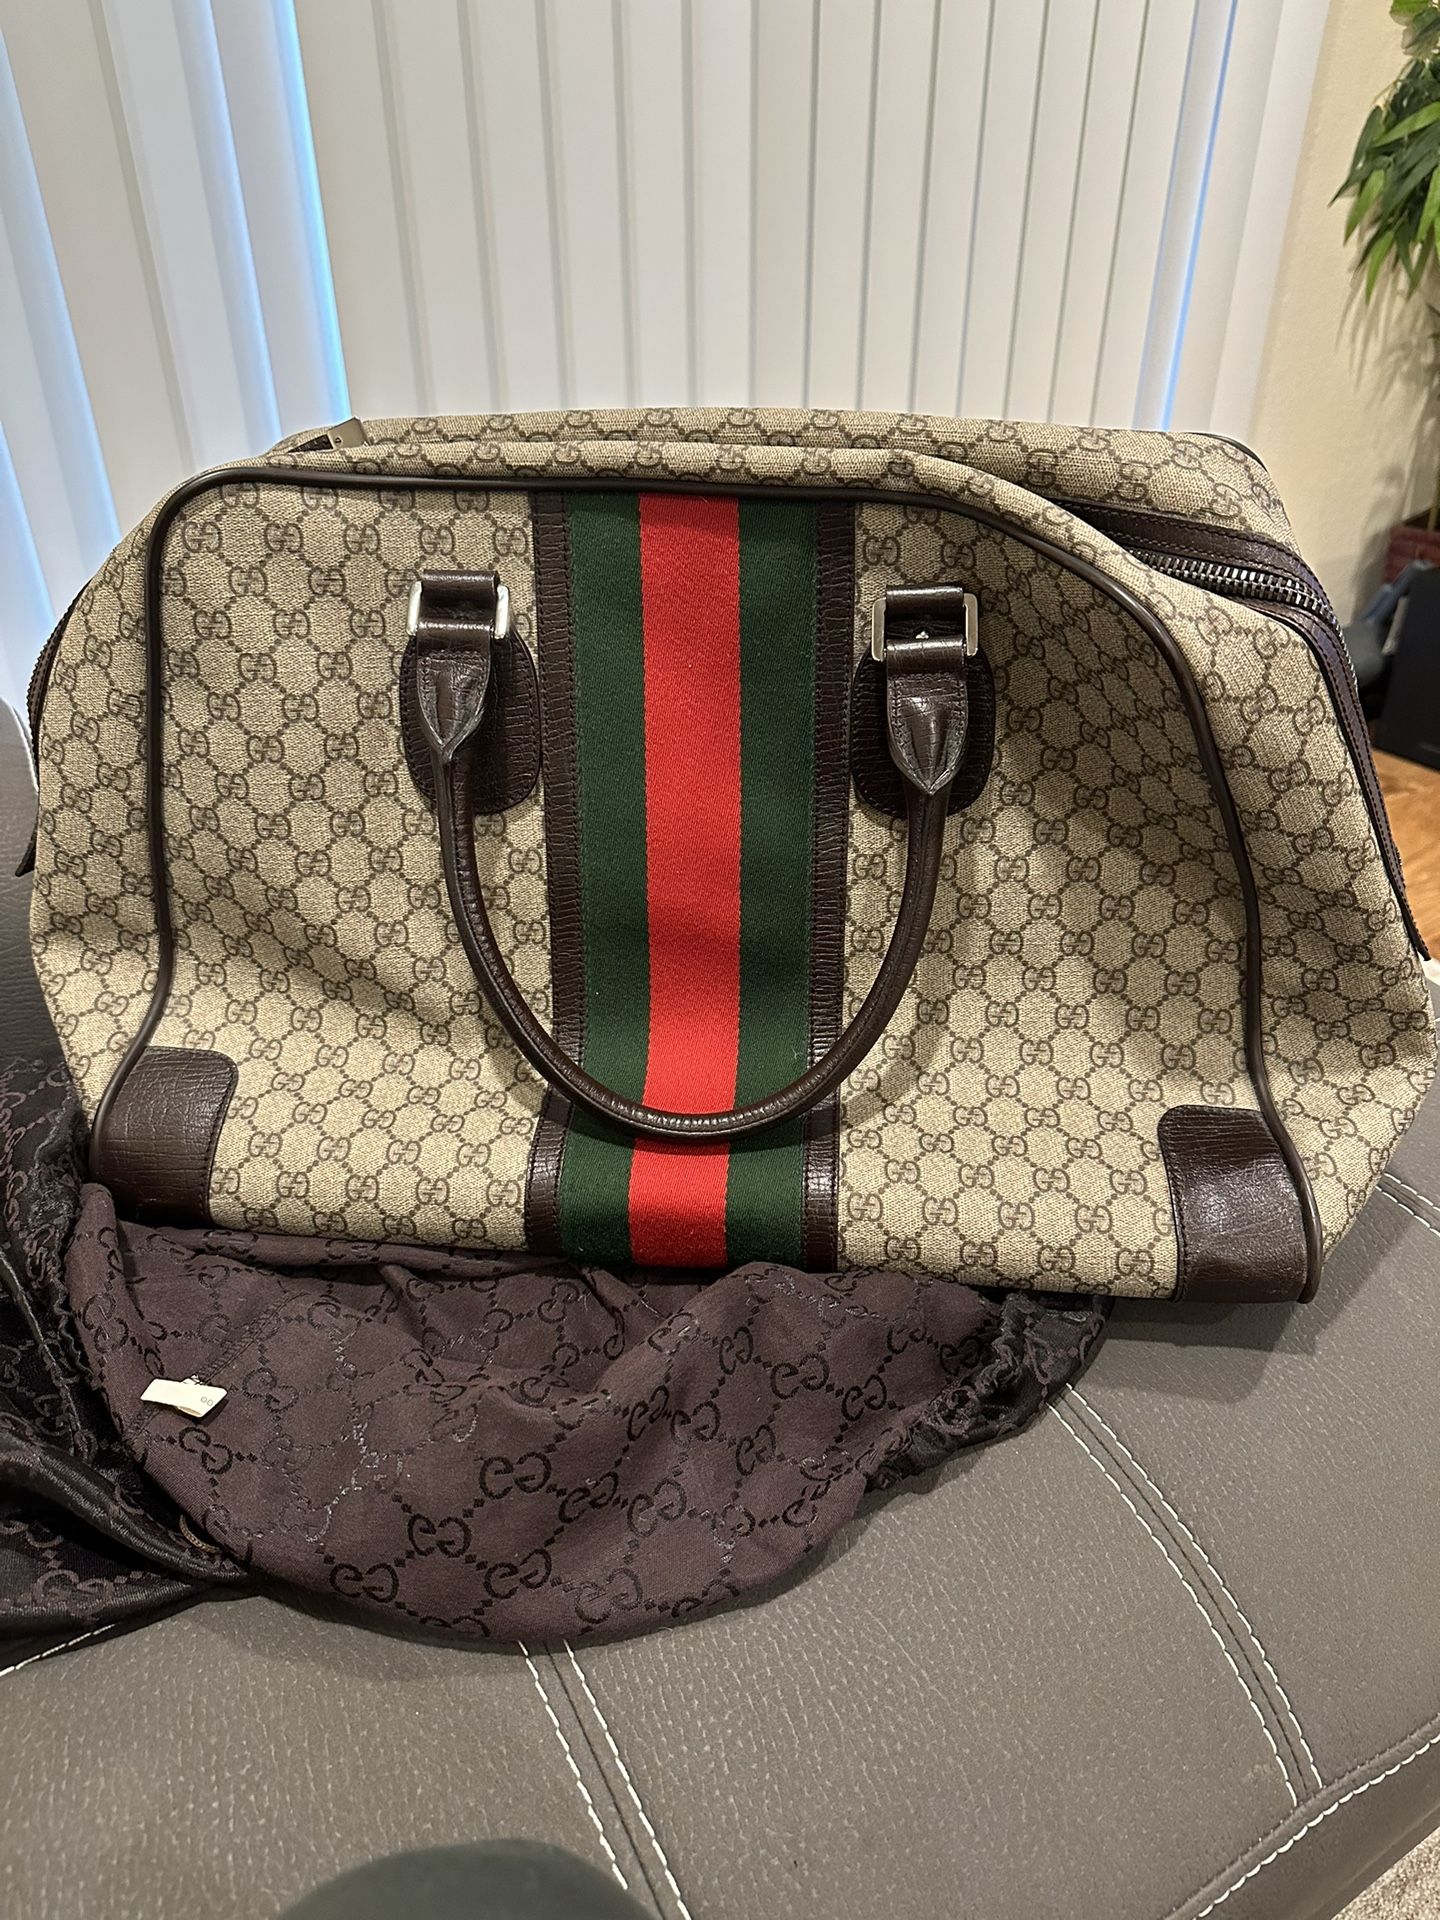 Gucci Duffle Bag 